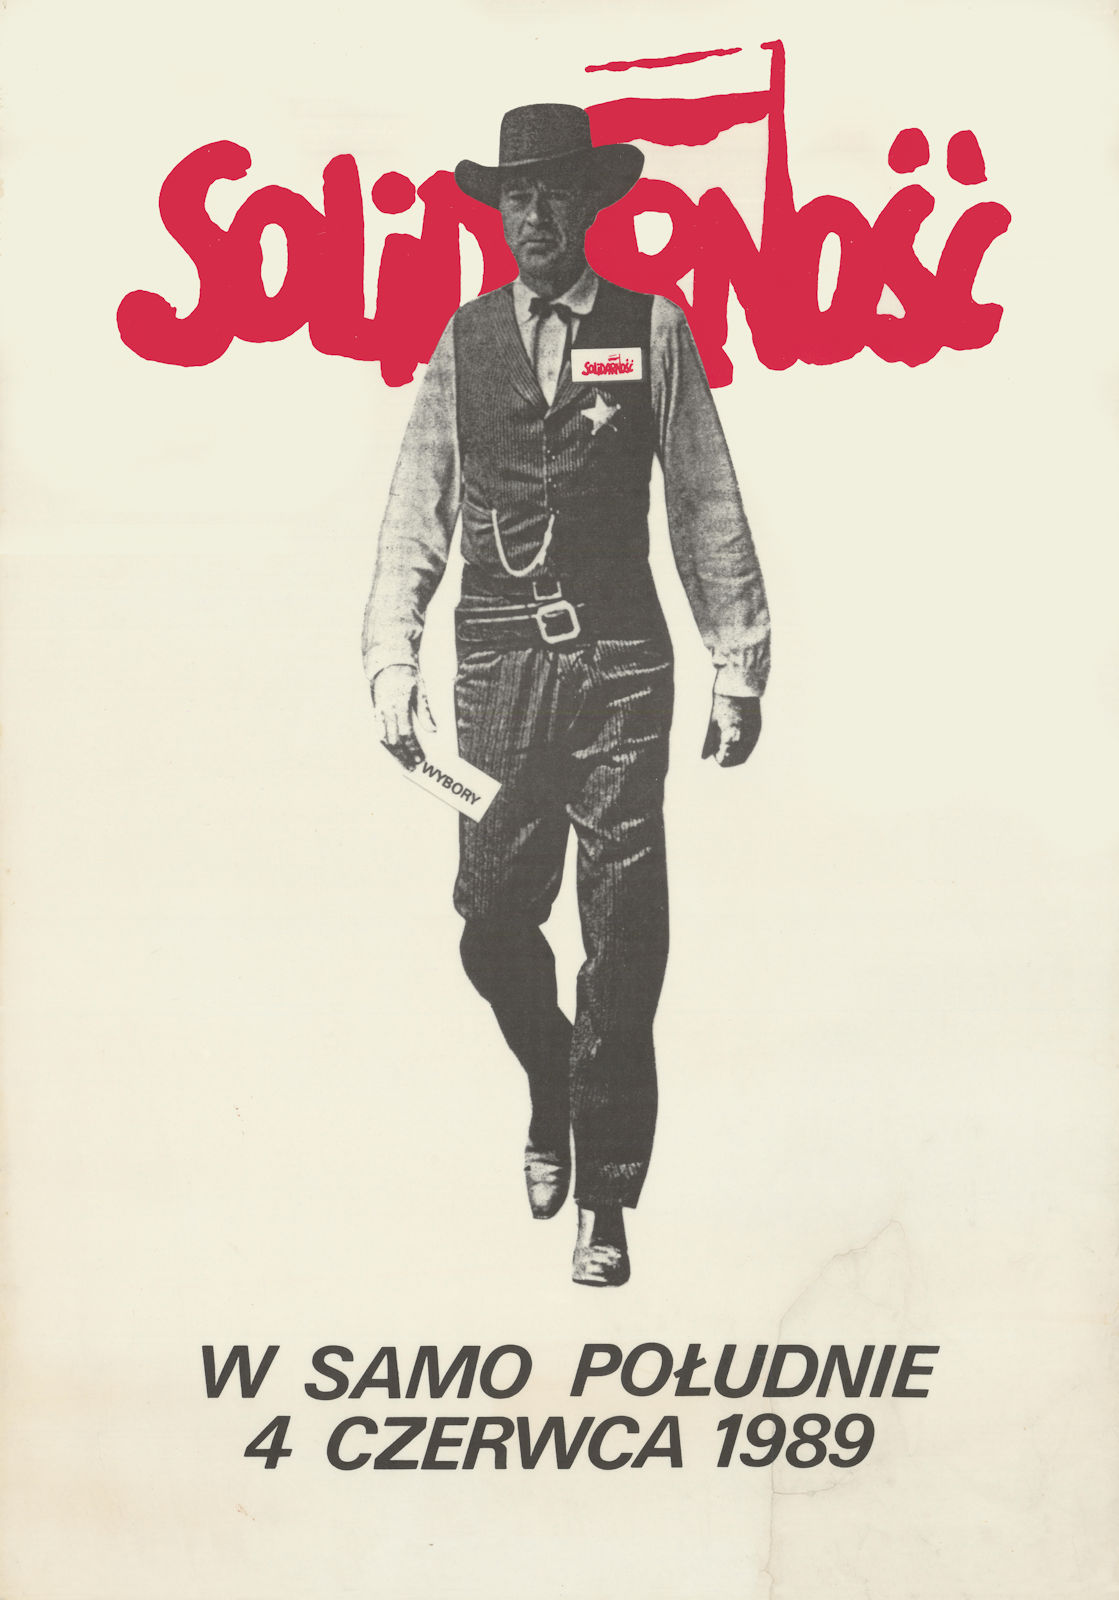 SOLIDARNOSC - W samo południe. Solidarity - High Noon - Election poster 1989